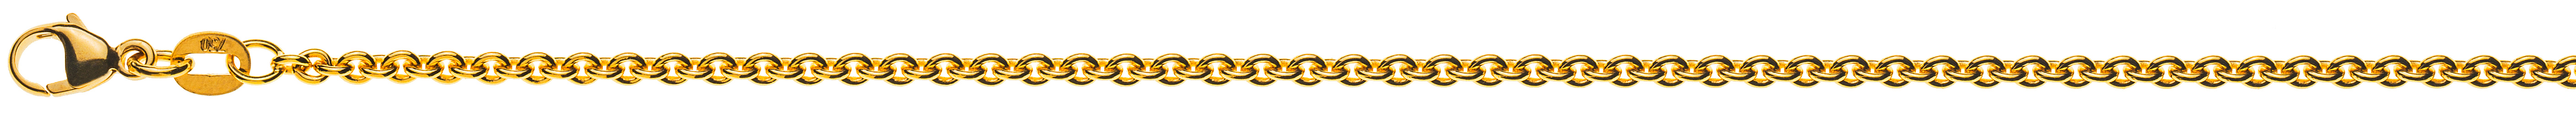 AURONOS Prestige Necklace Yellow Gold 18K Round Anchor 50cm 2.3mm